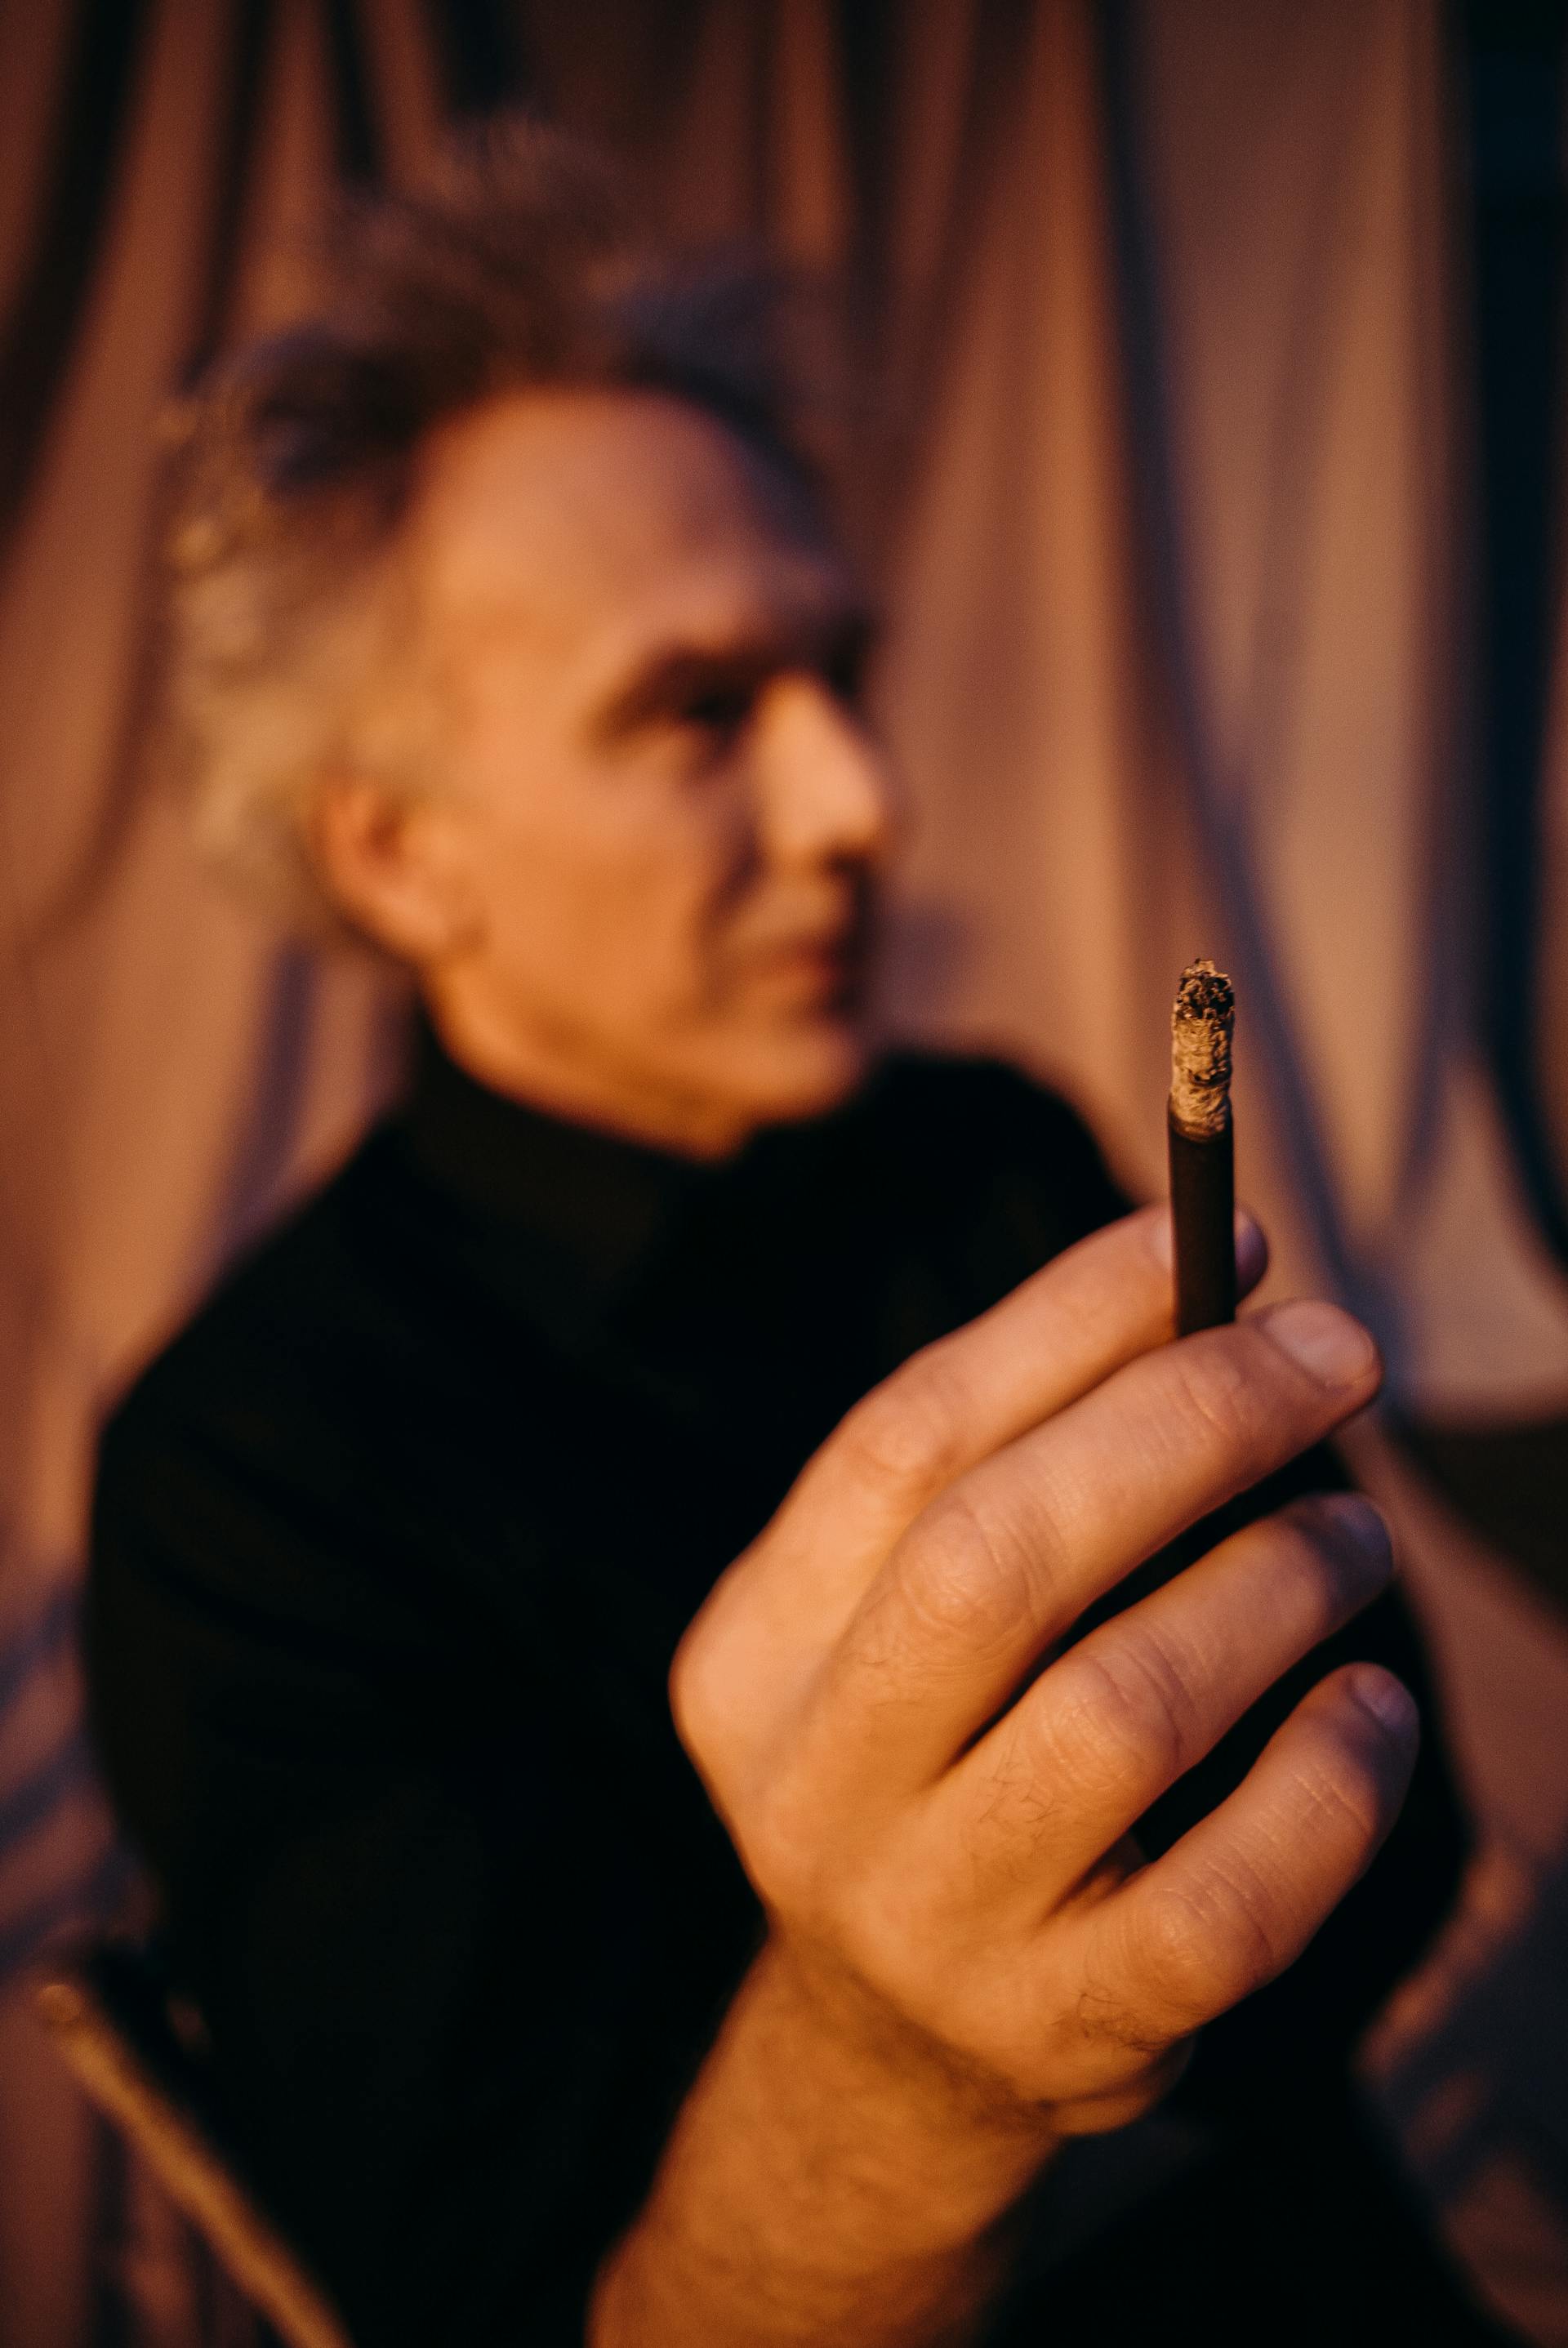 A man smoking a cigarette | Source: Pexels